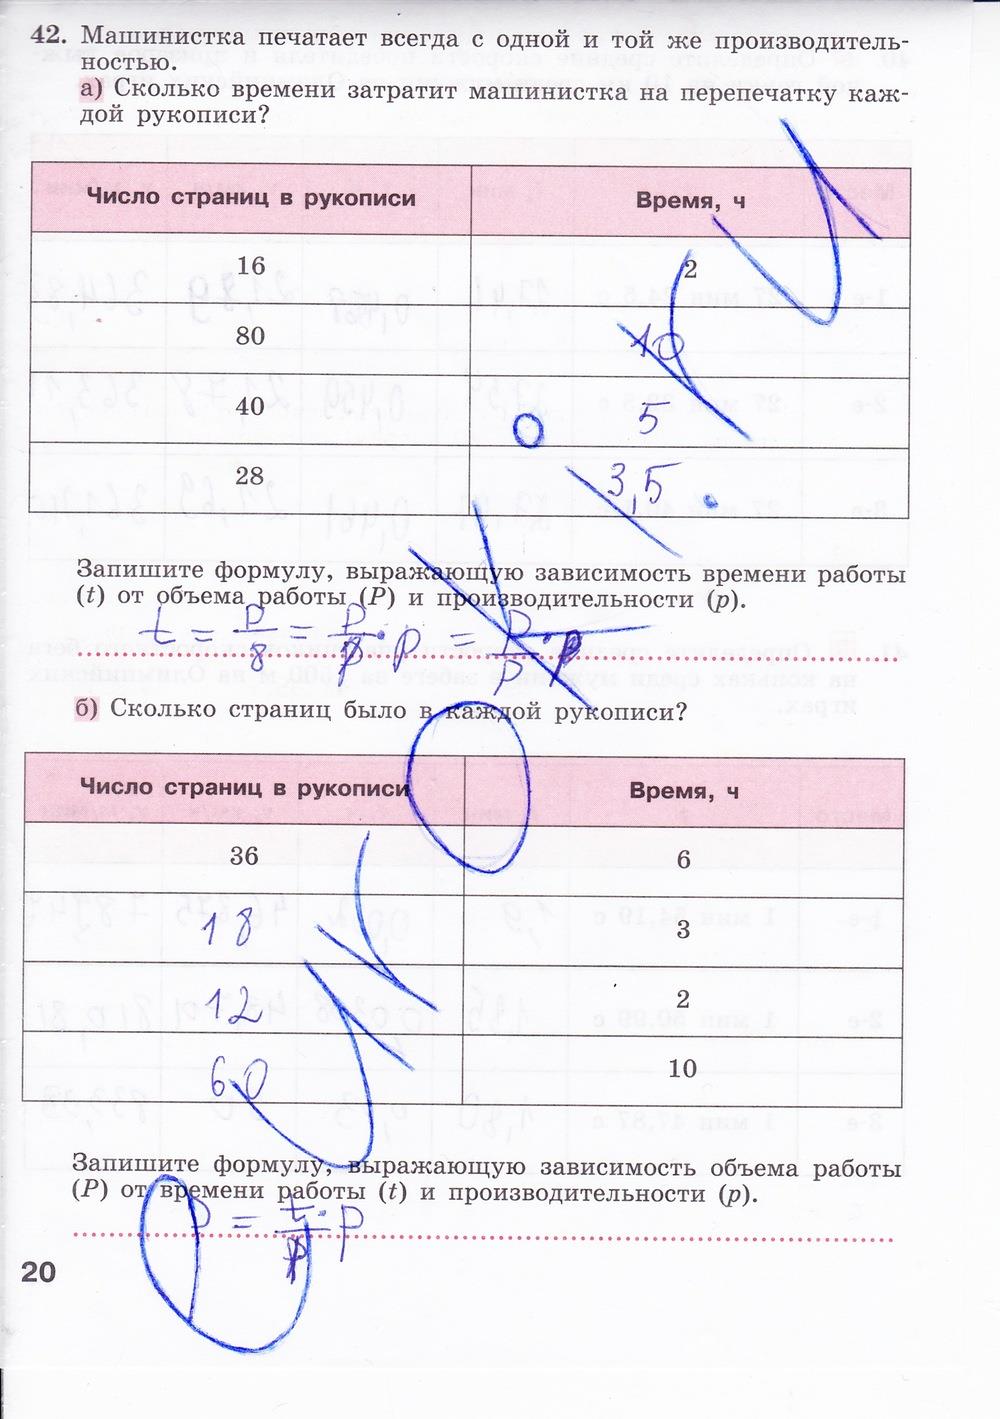 гдз 7 класс рабочая тетрадь страница 20 алгебра Минаева, Рослова